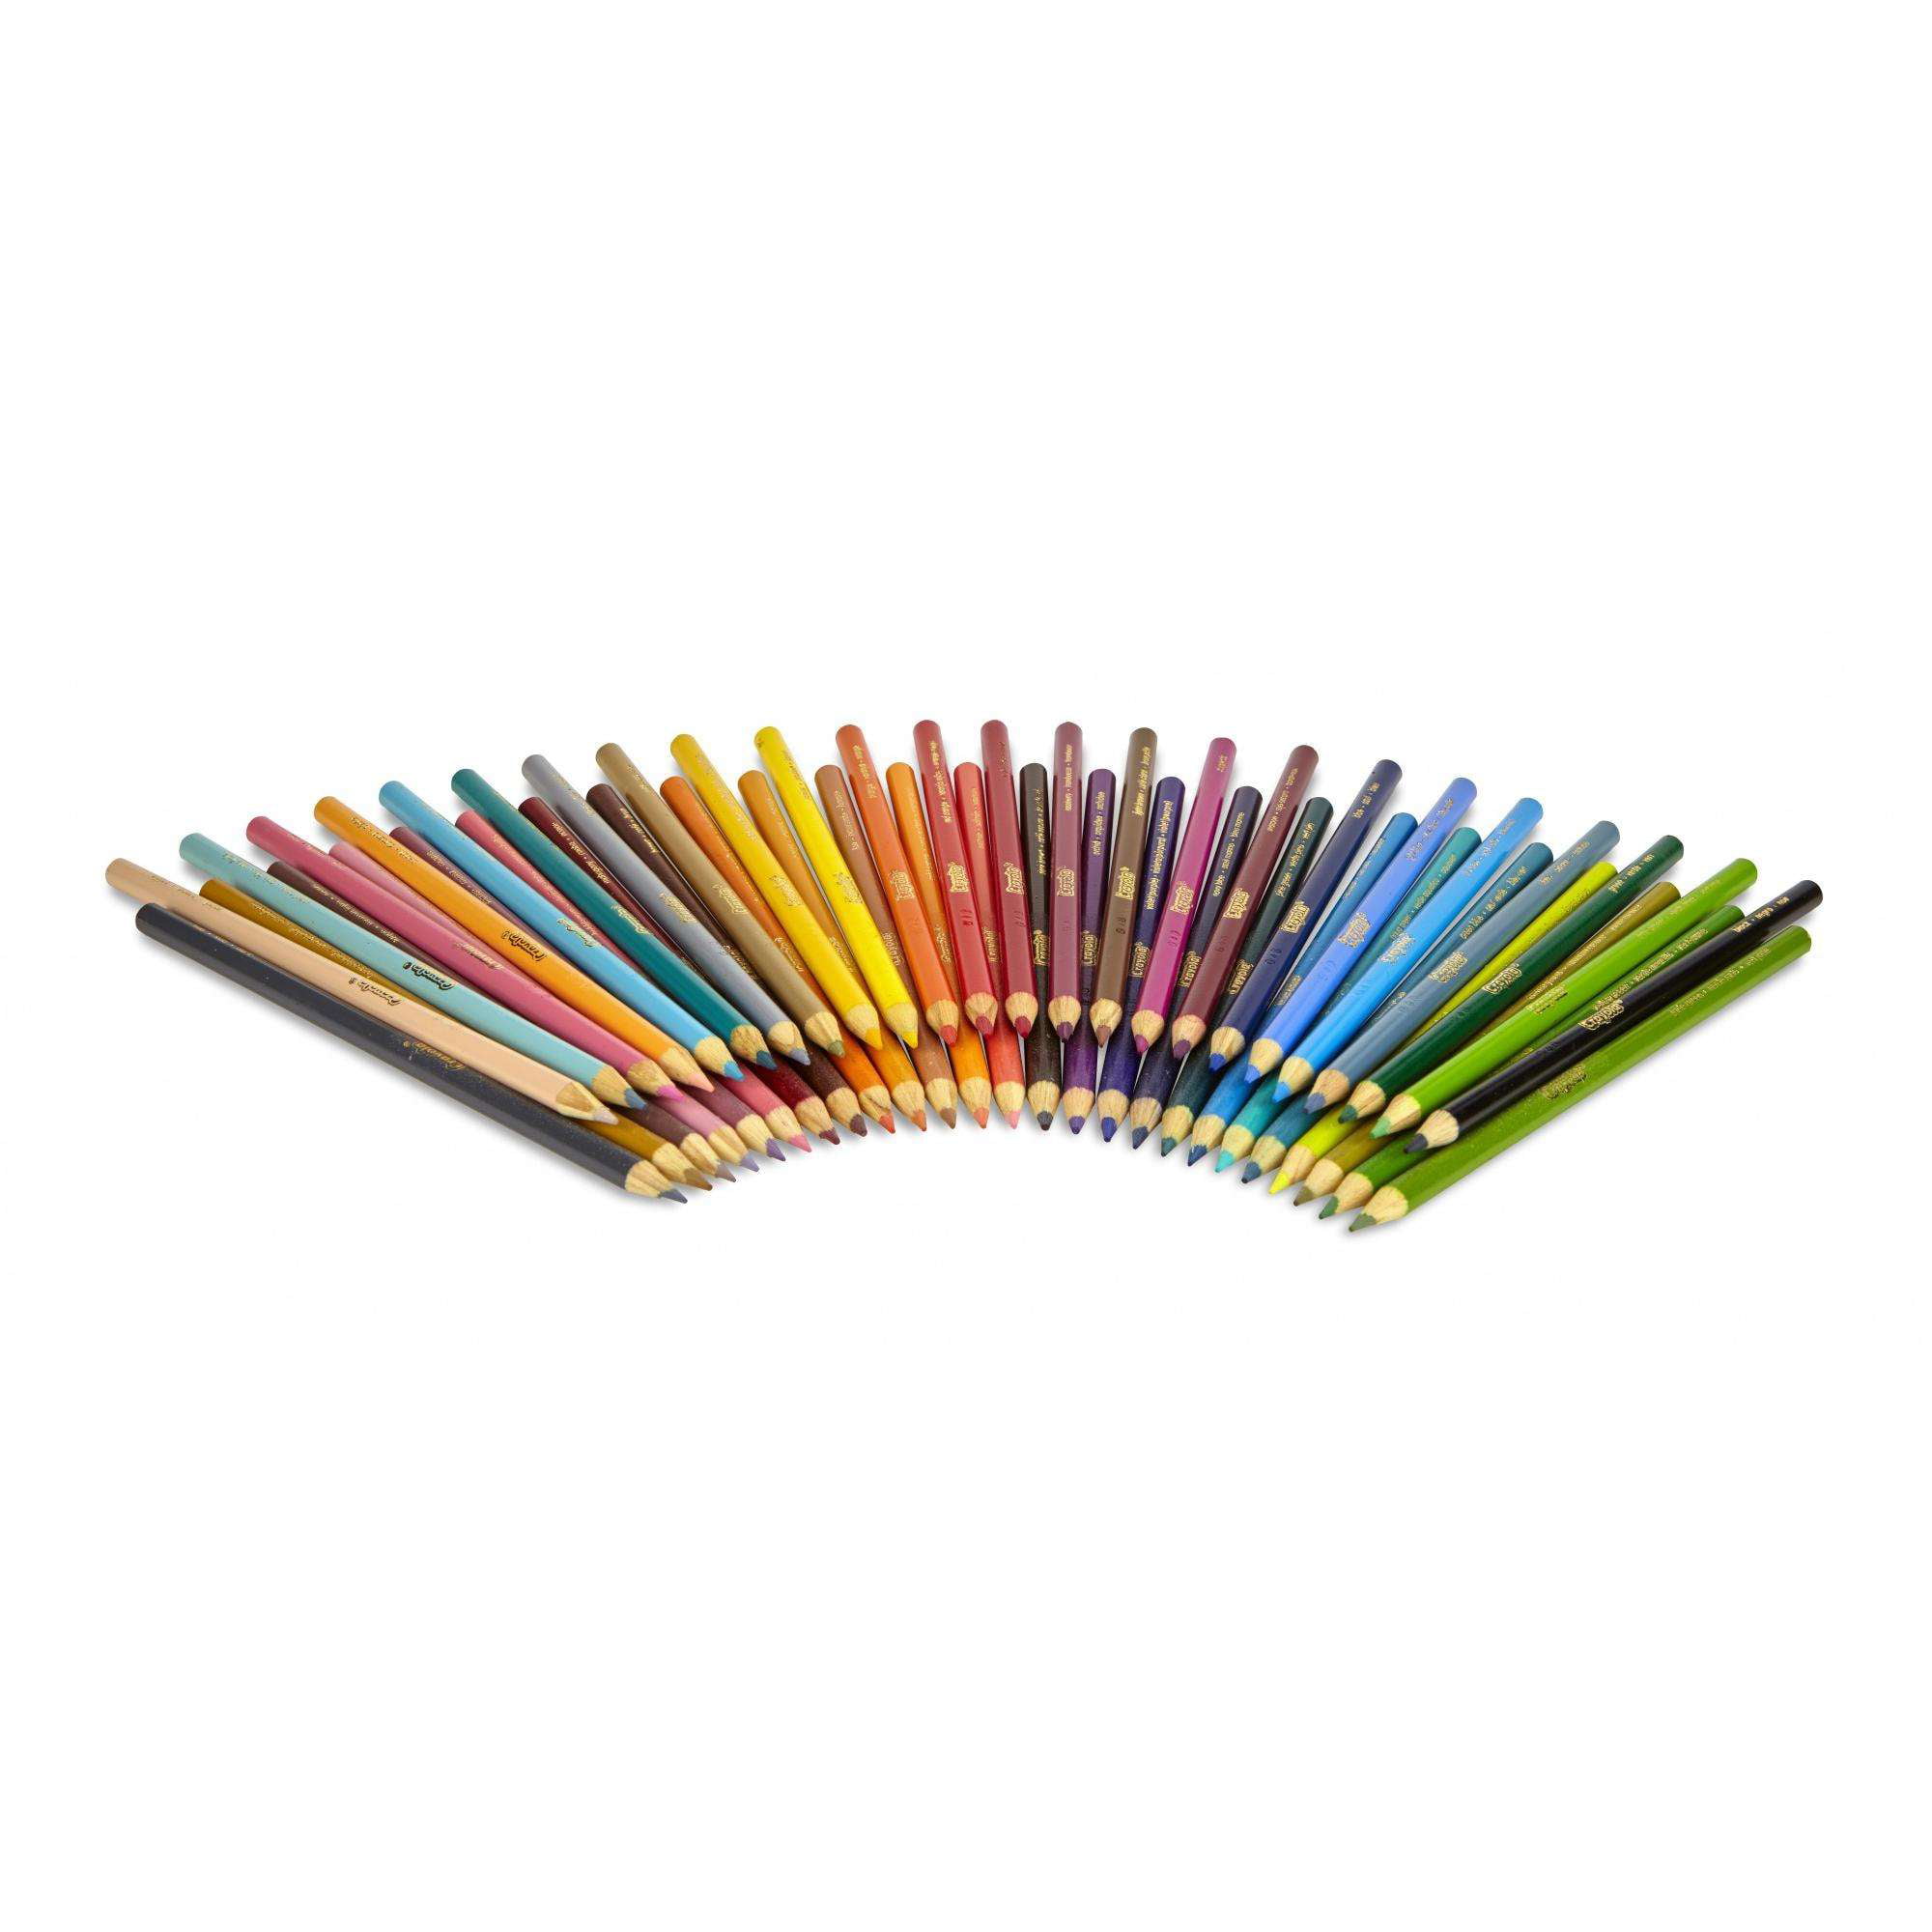 Crayola Colored Pencils - 50 Count - Jewel-Osco